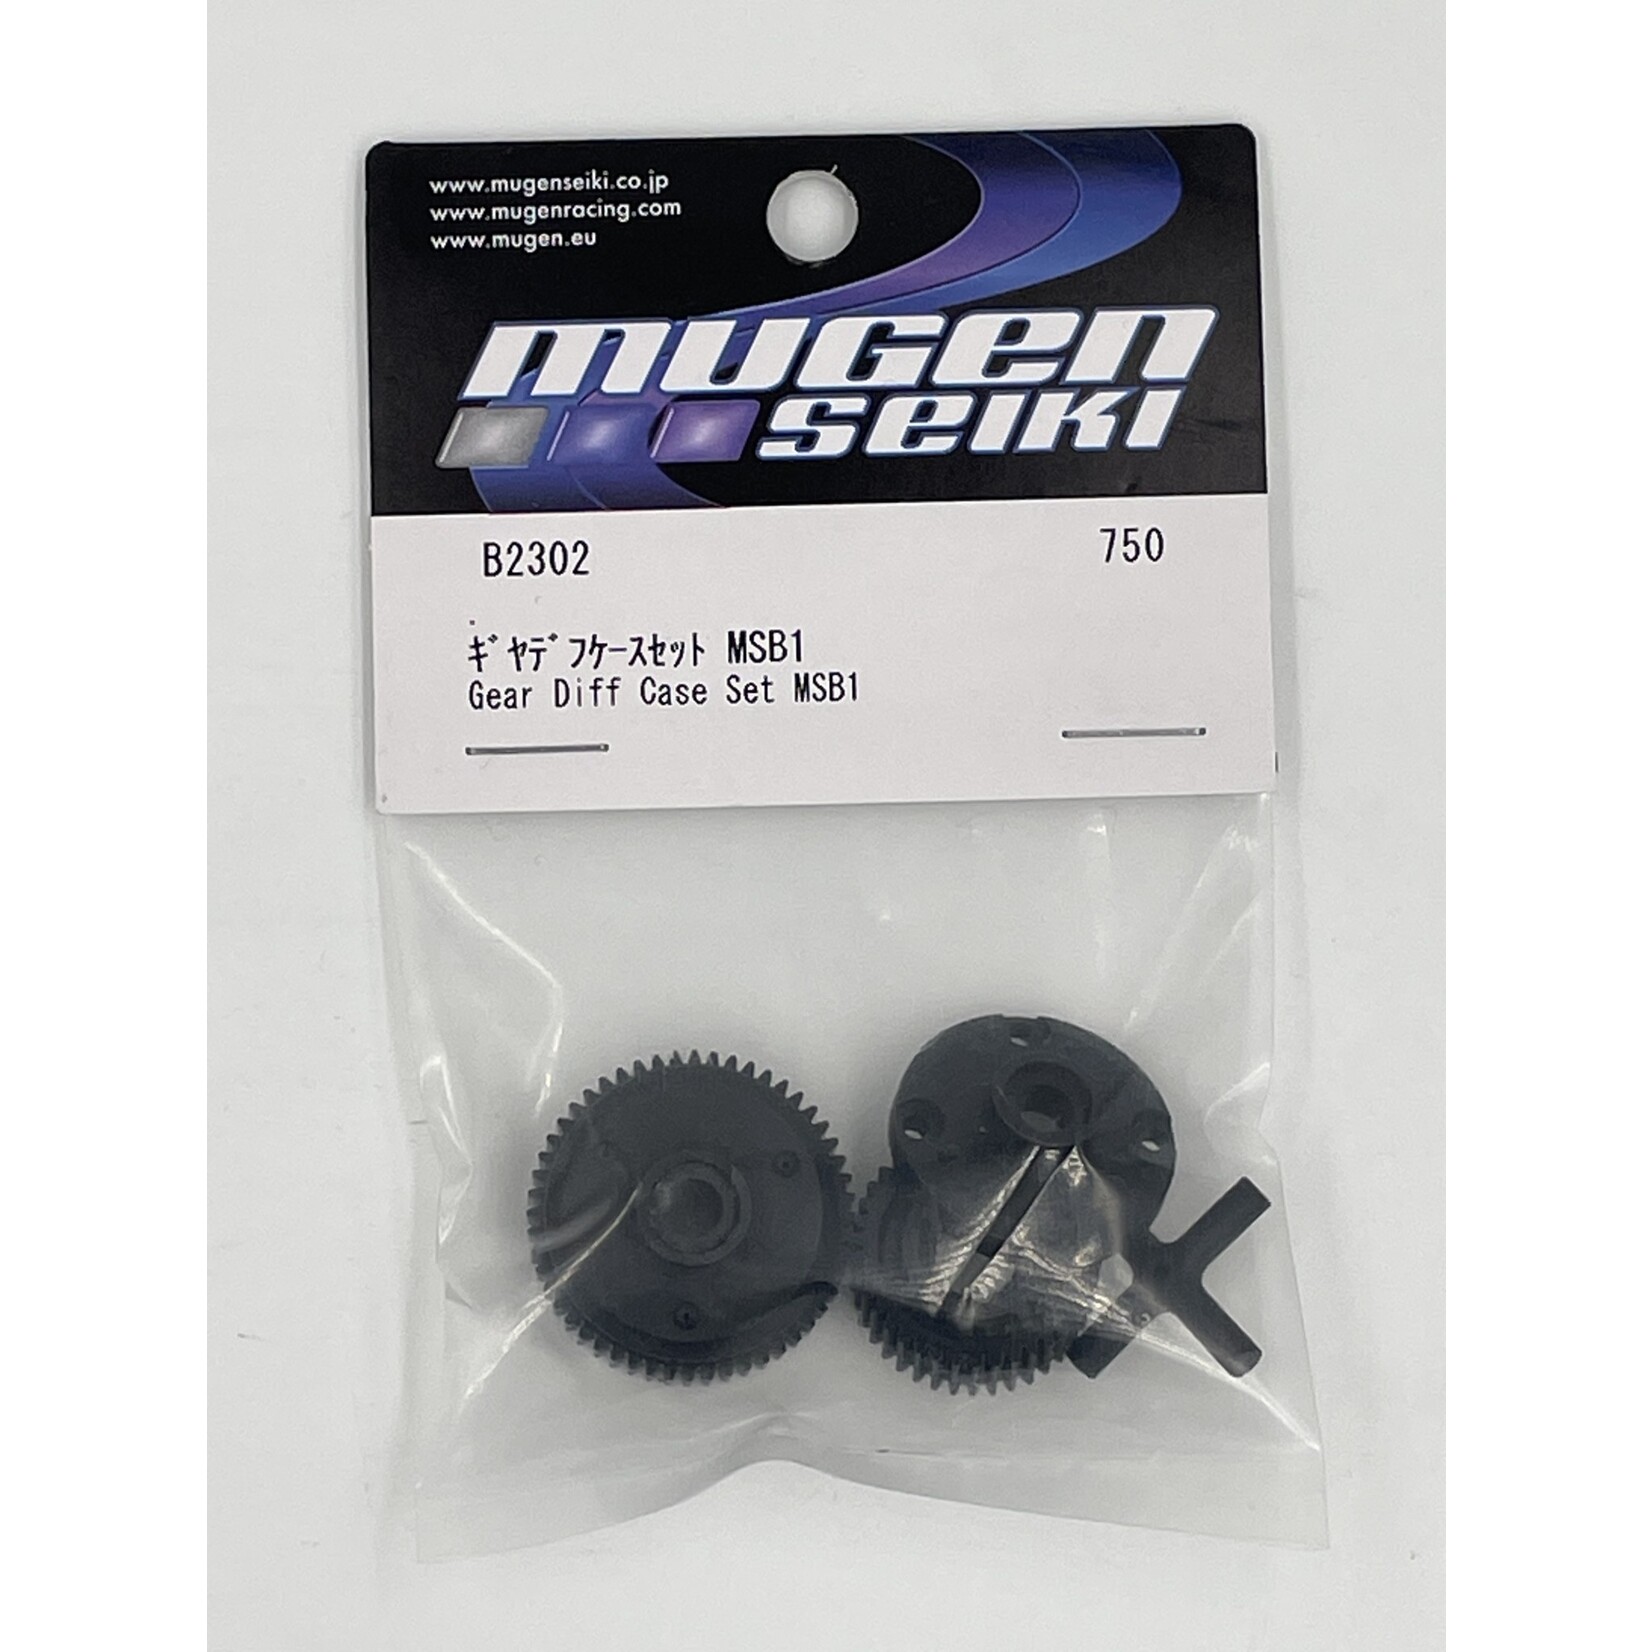 Mugen B2302 Mugen Gear Diff Gear Set: MSB1